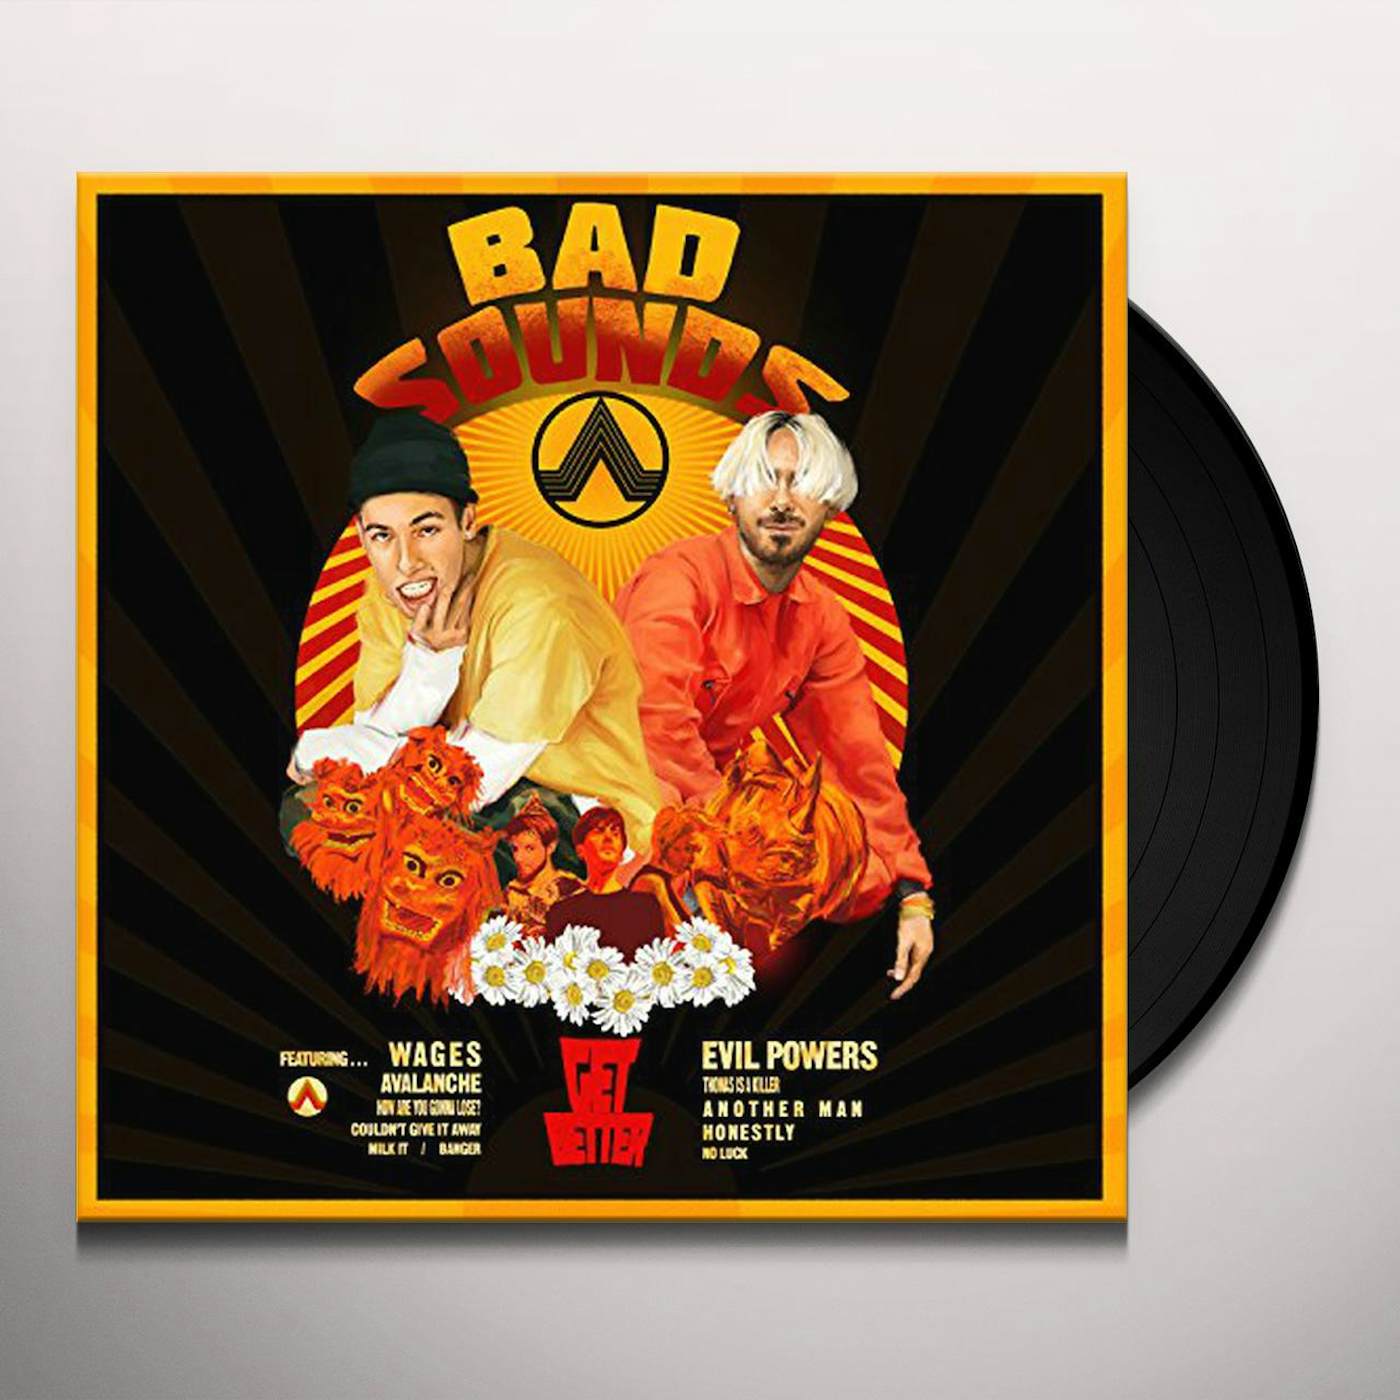 Bad Sounds Get Better Vinyl Record